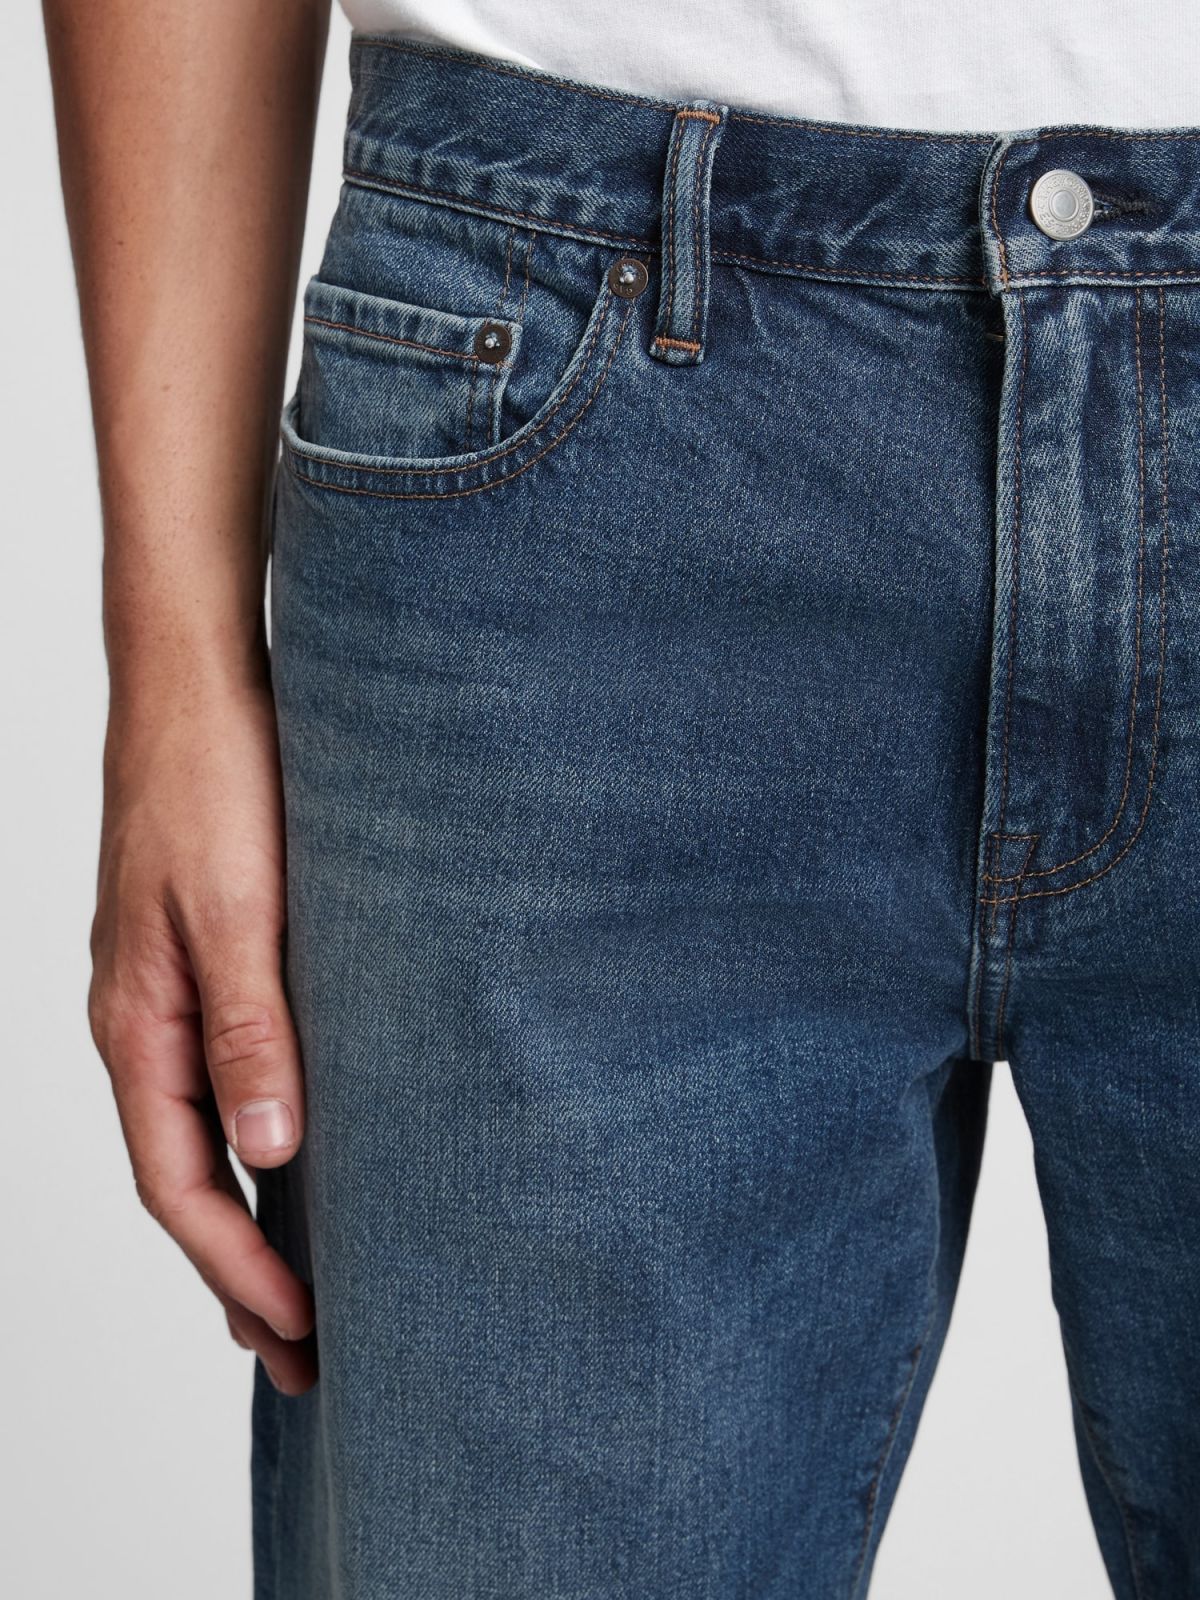  ג'ינס ווש בגזרה ישרה של GAP